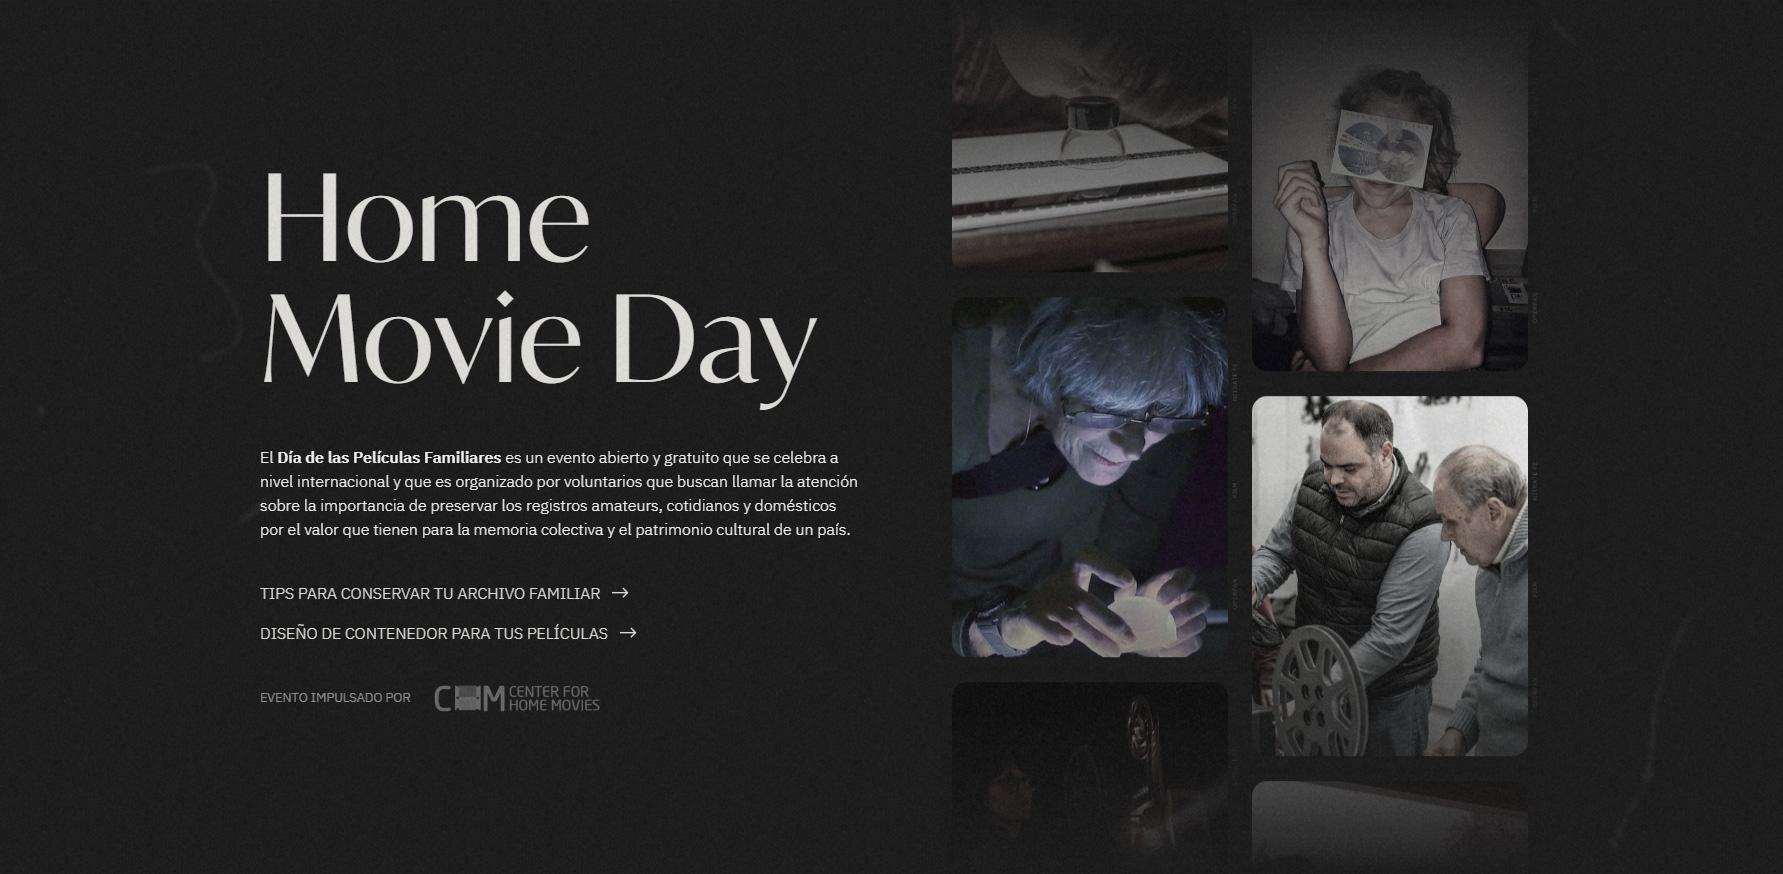 Cine Casero - Website of the Day